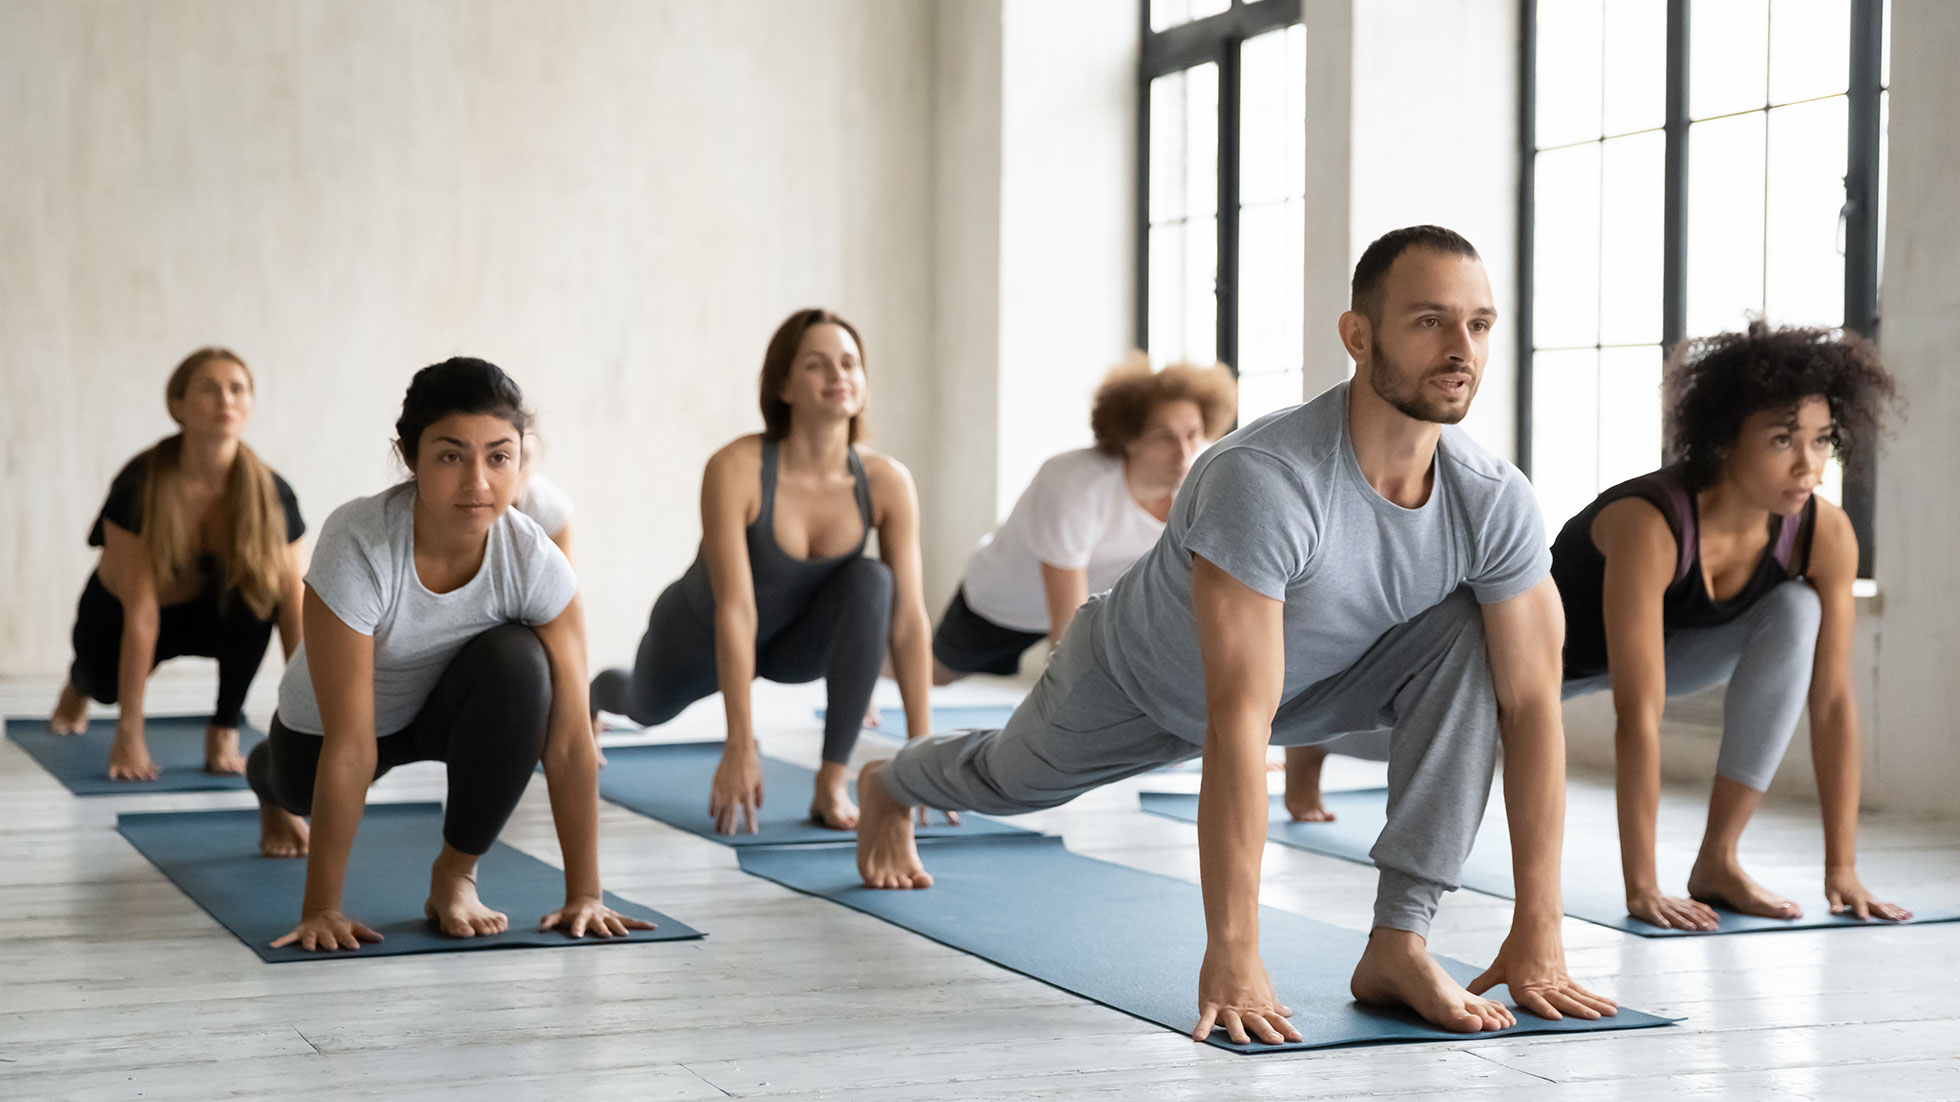 Mat-Based Pilates, Bleevable Prana Yoga & Wellness, Newport News